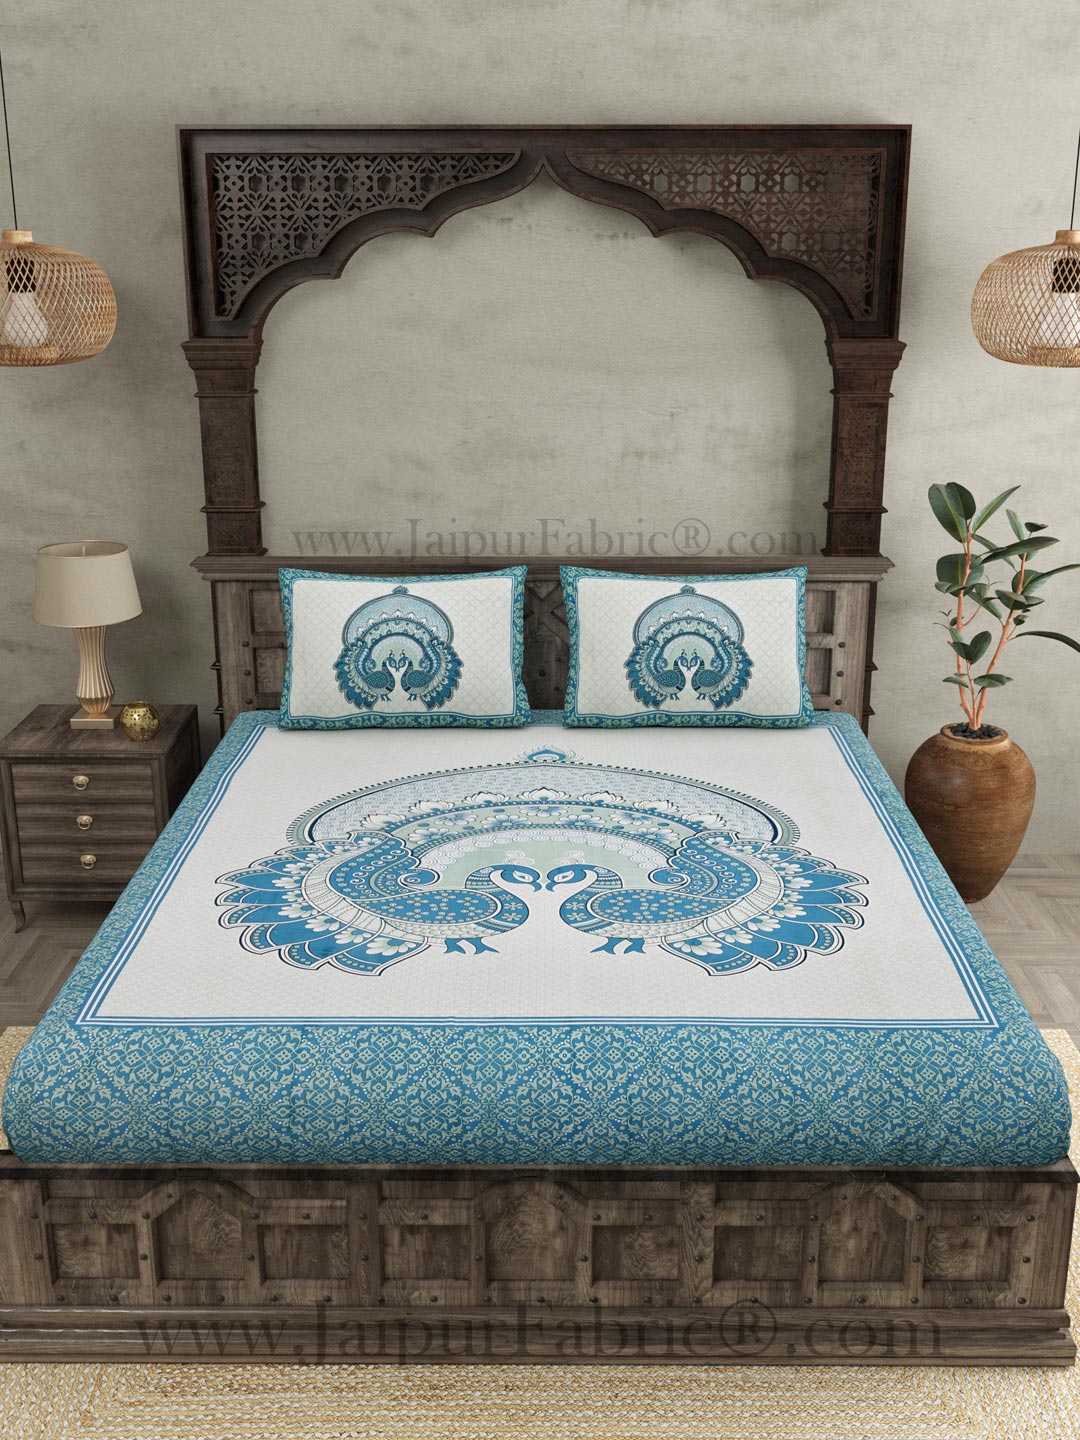 Royal Jaipur Fabric Blue Pure Cotton Double BedSheet